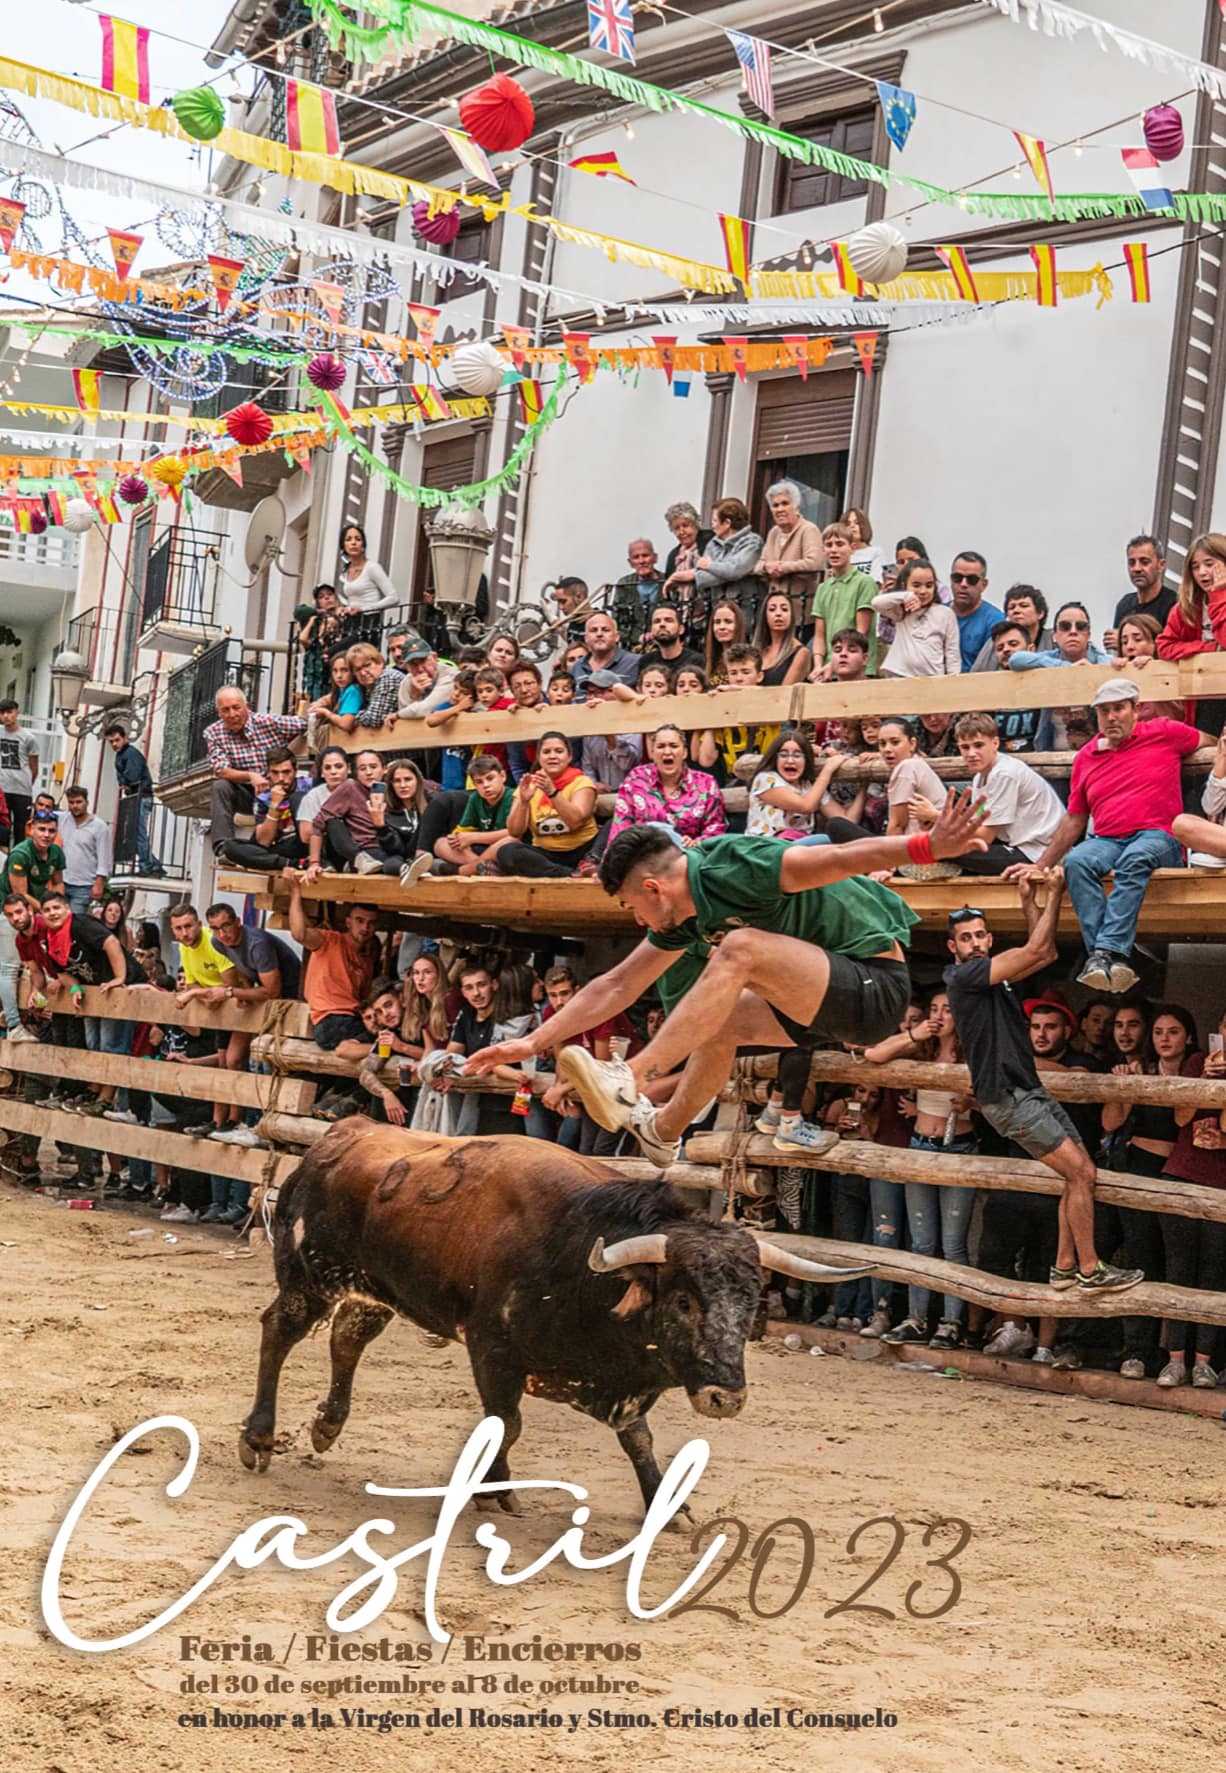 Castril Fair, Fiestas and Running of the Bulls